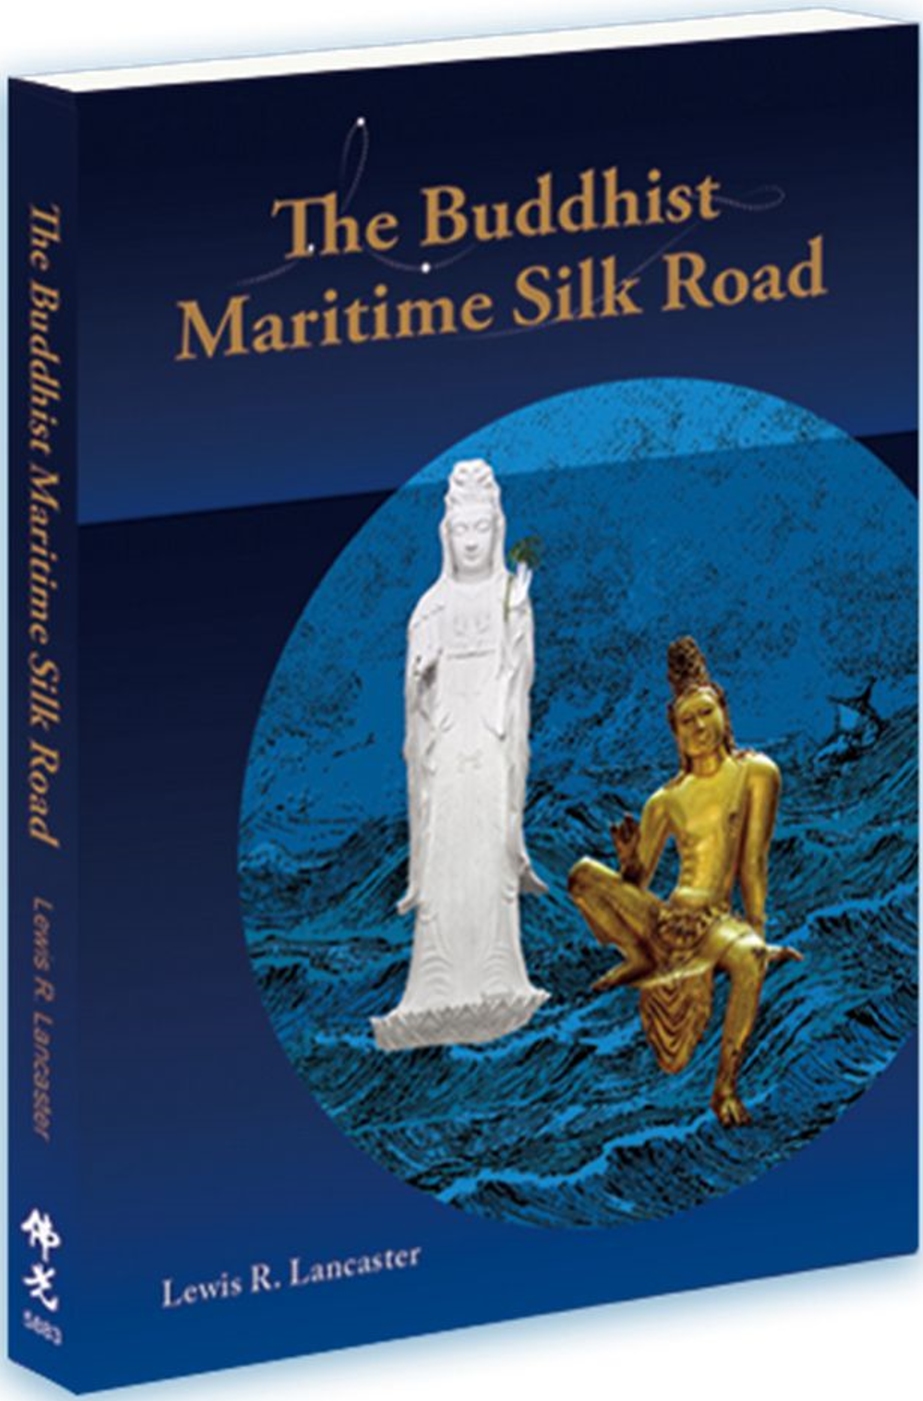 The Buddhist Maritime Silk Road